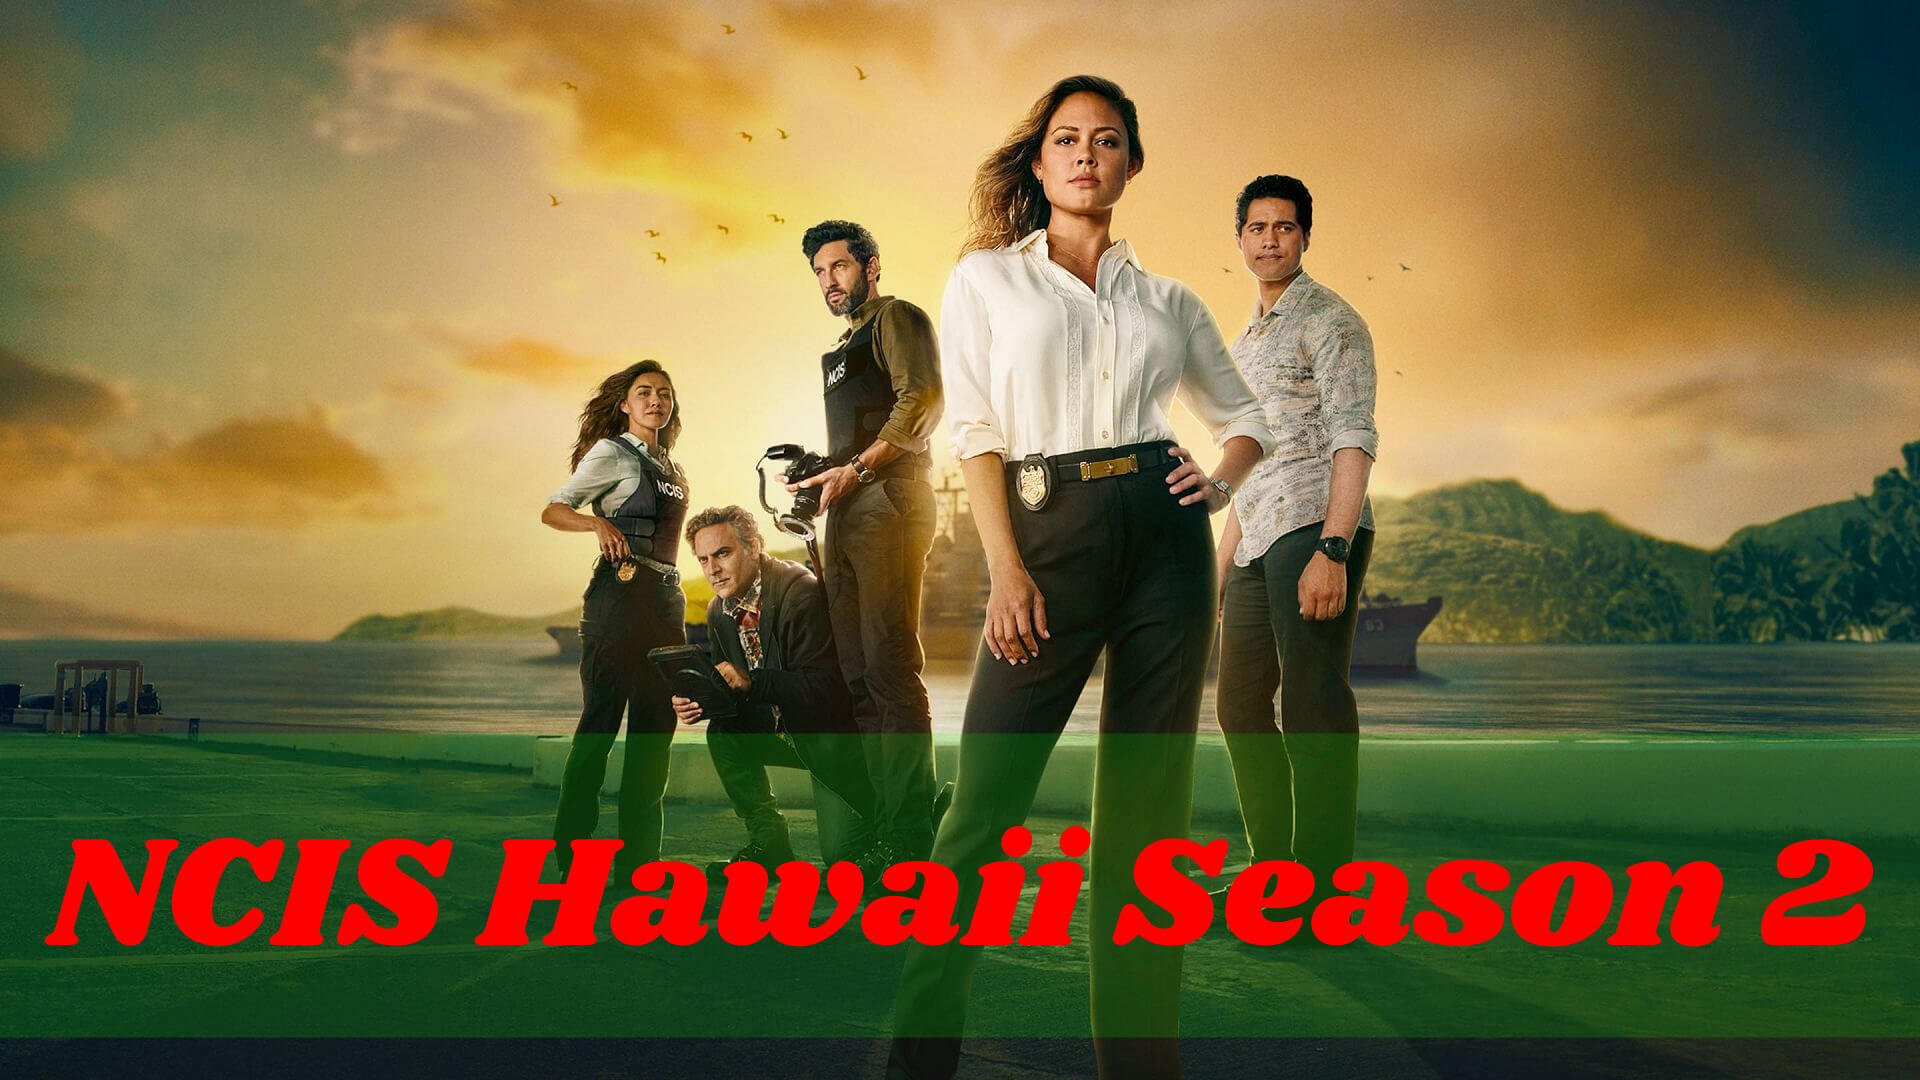 NCIS Hawaii Season 2 Release Date, Cast, Plot - All We Know So Far ...